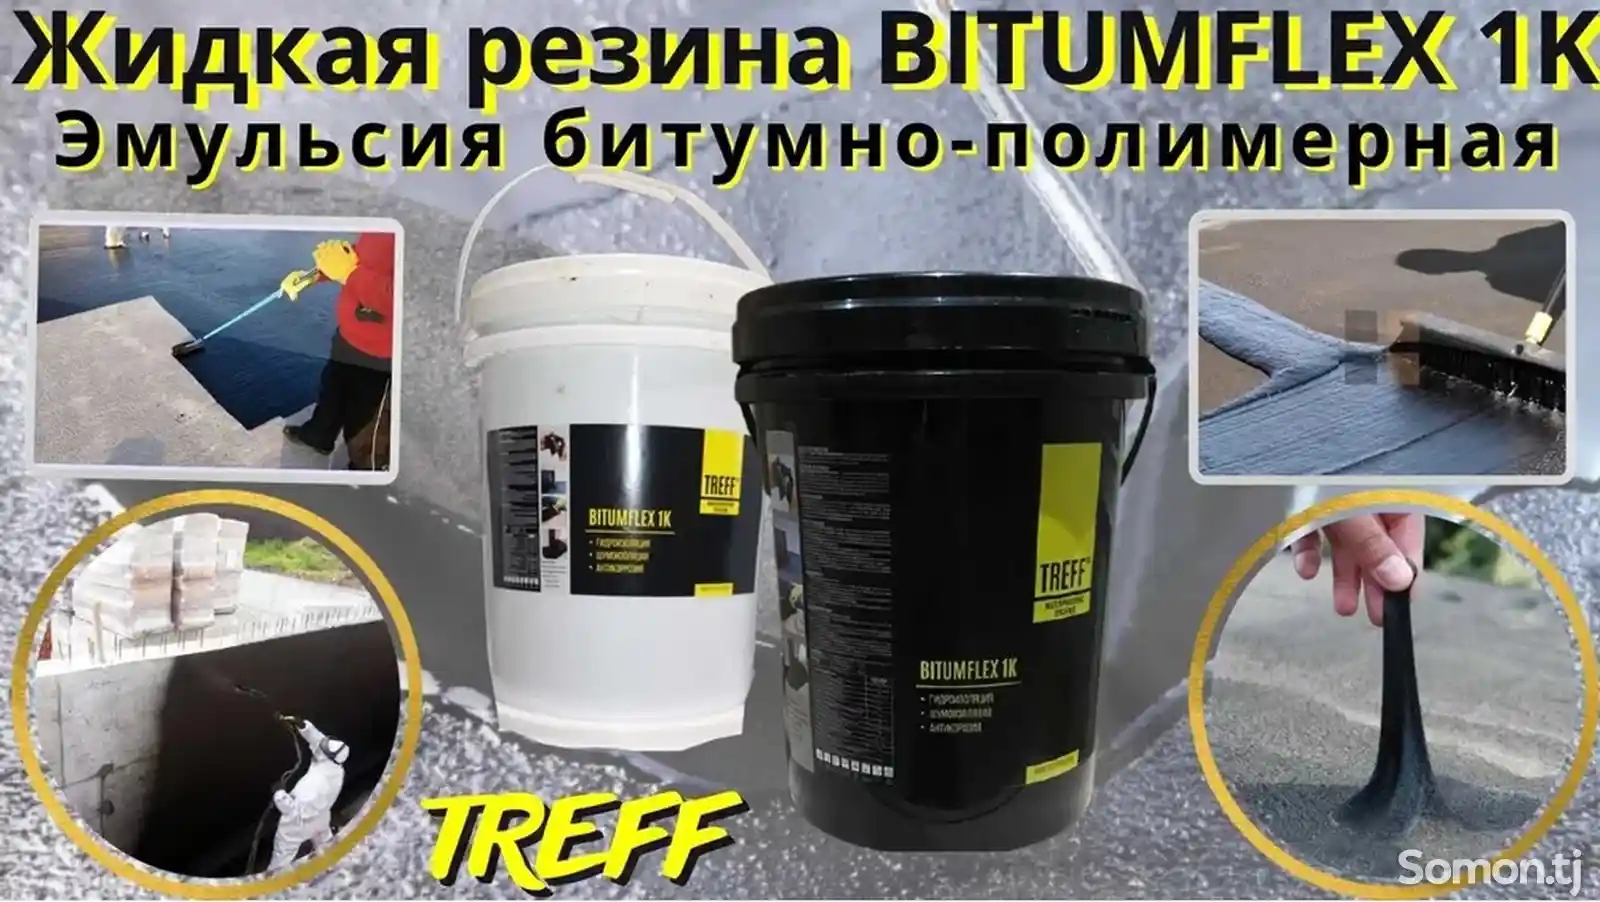 Жидкая резина Bitumflex 1K битумно-полимерная Гидроизоляция Treff-1